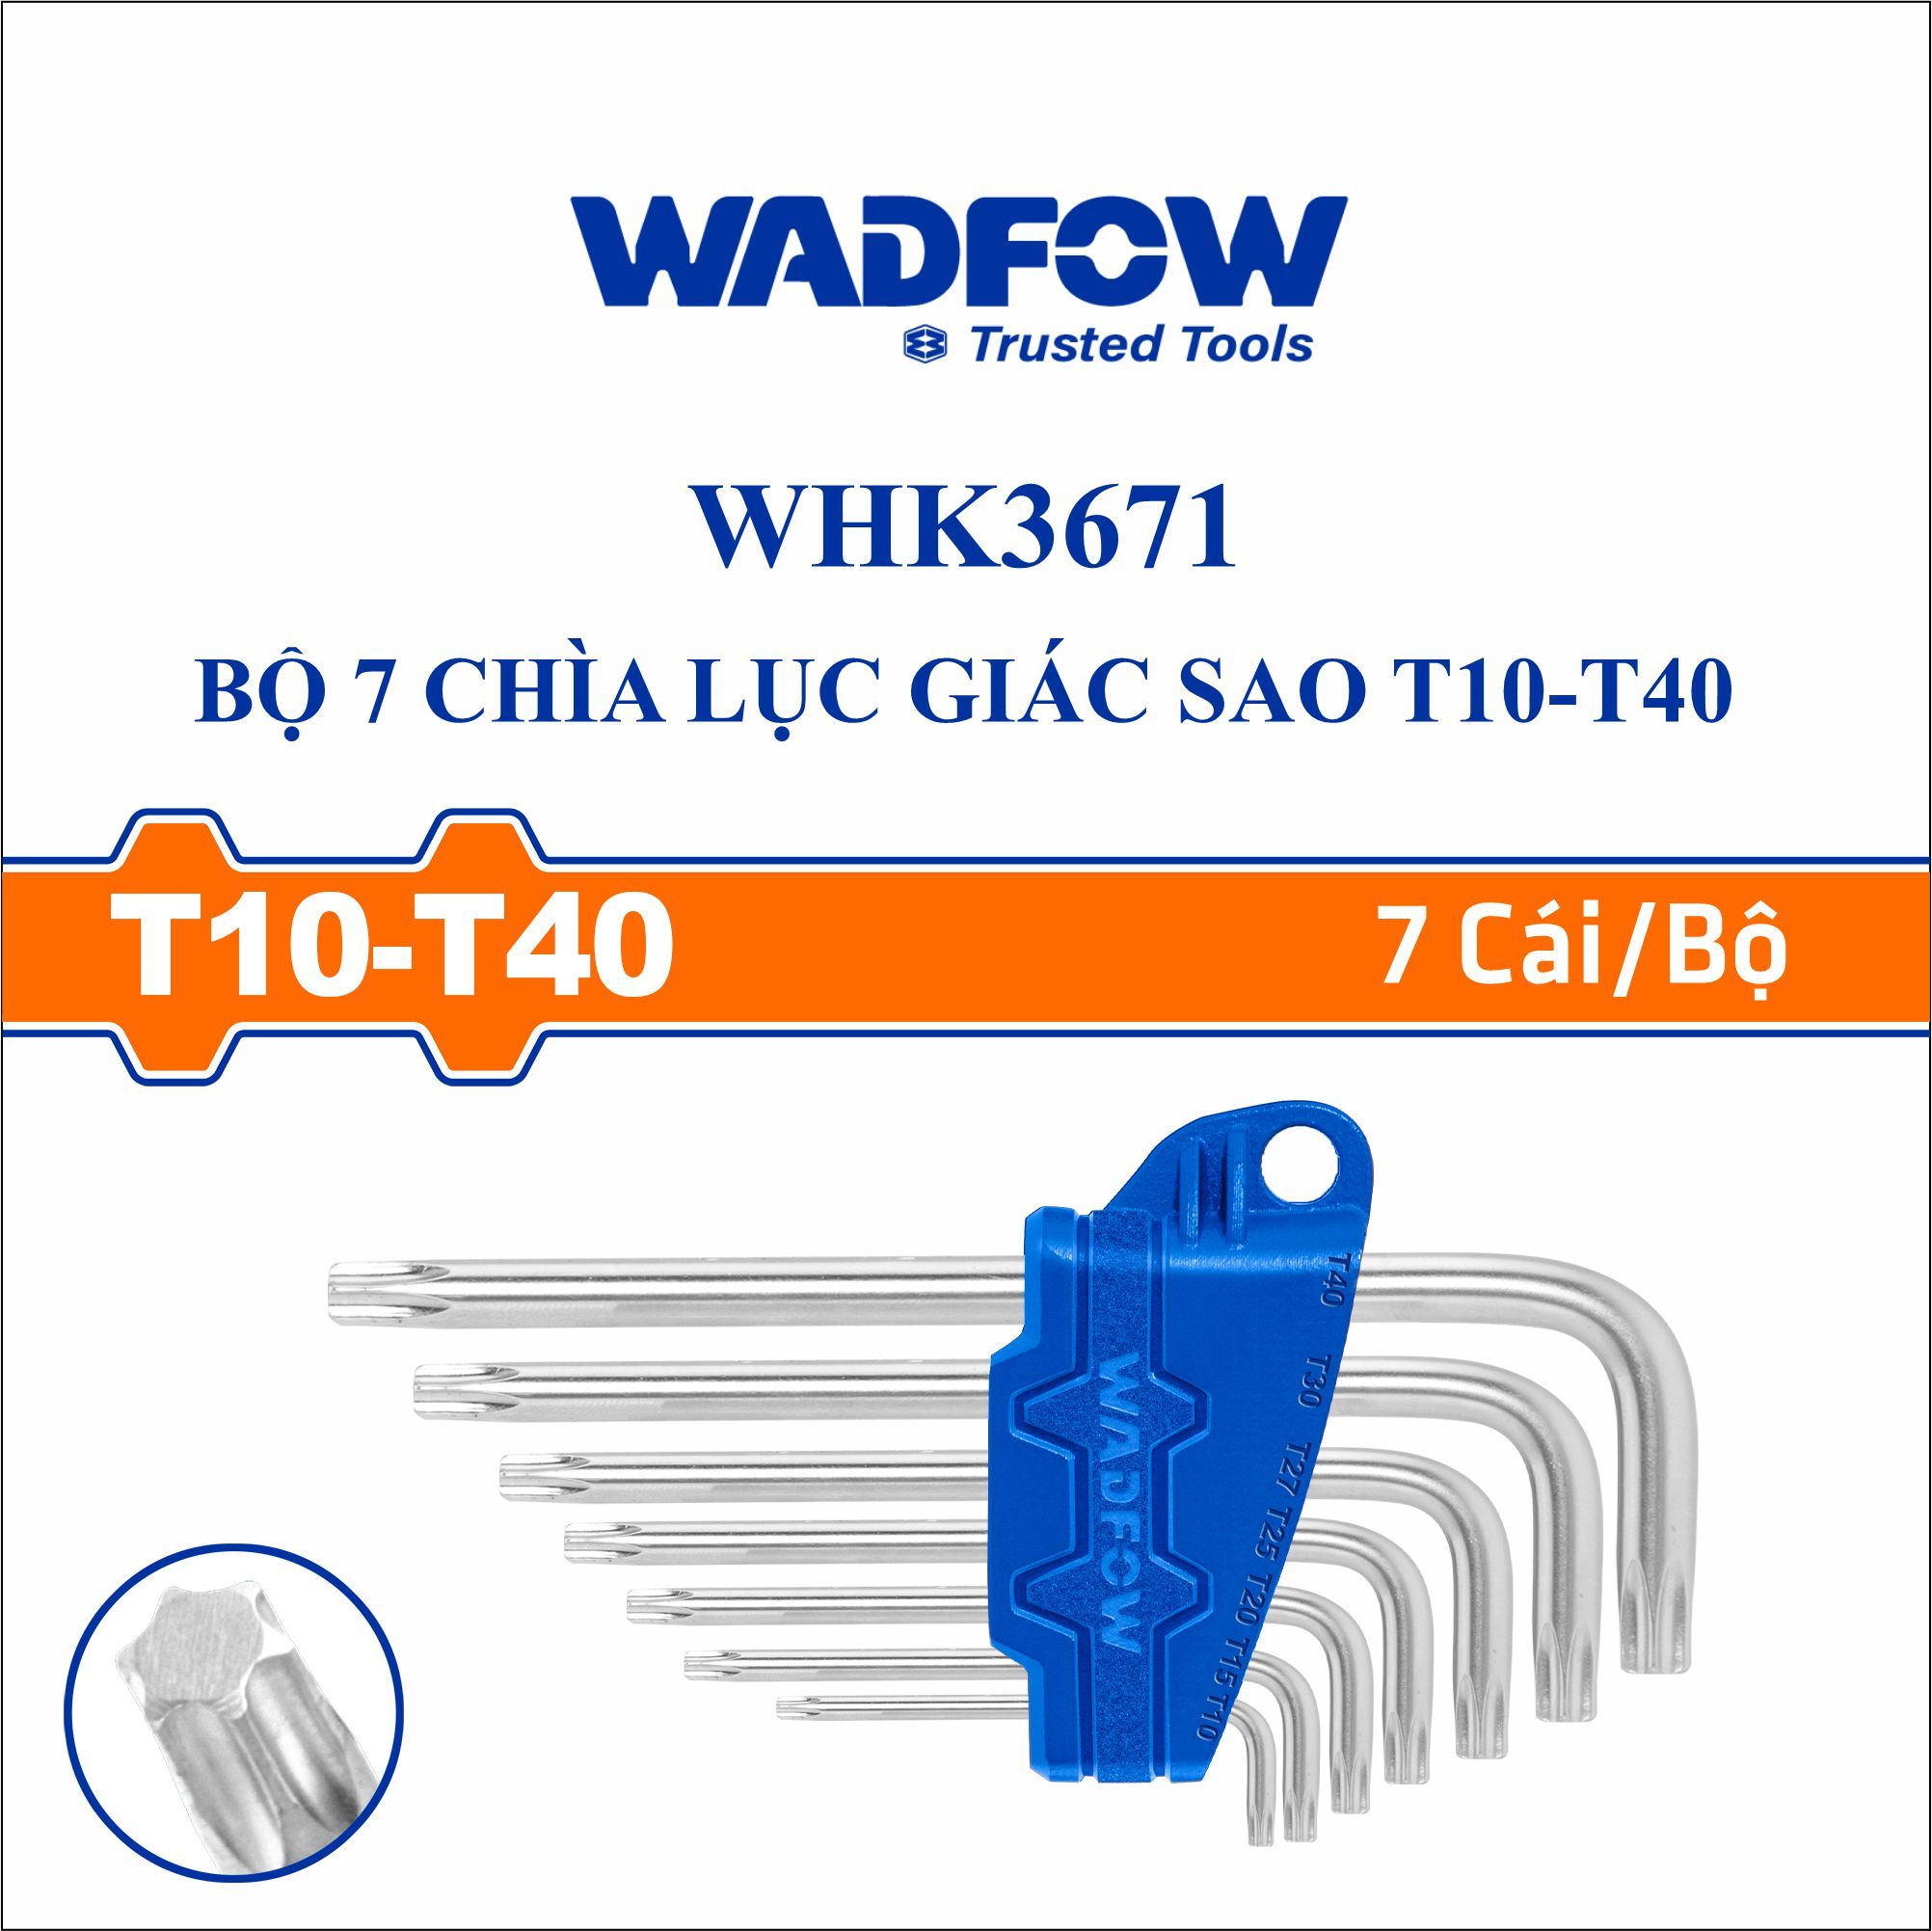  Bộ 7 chìa lục giác sao T10-T40 WADFOW WHK3671 